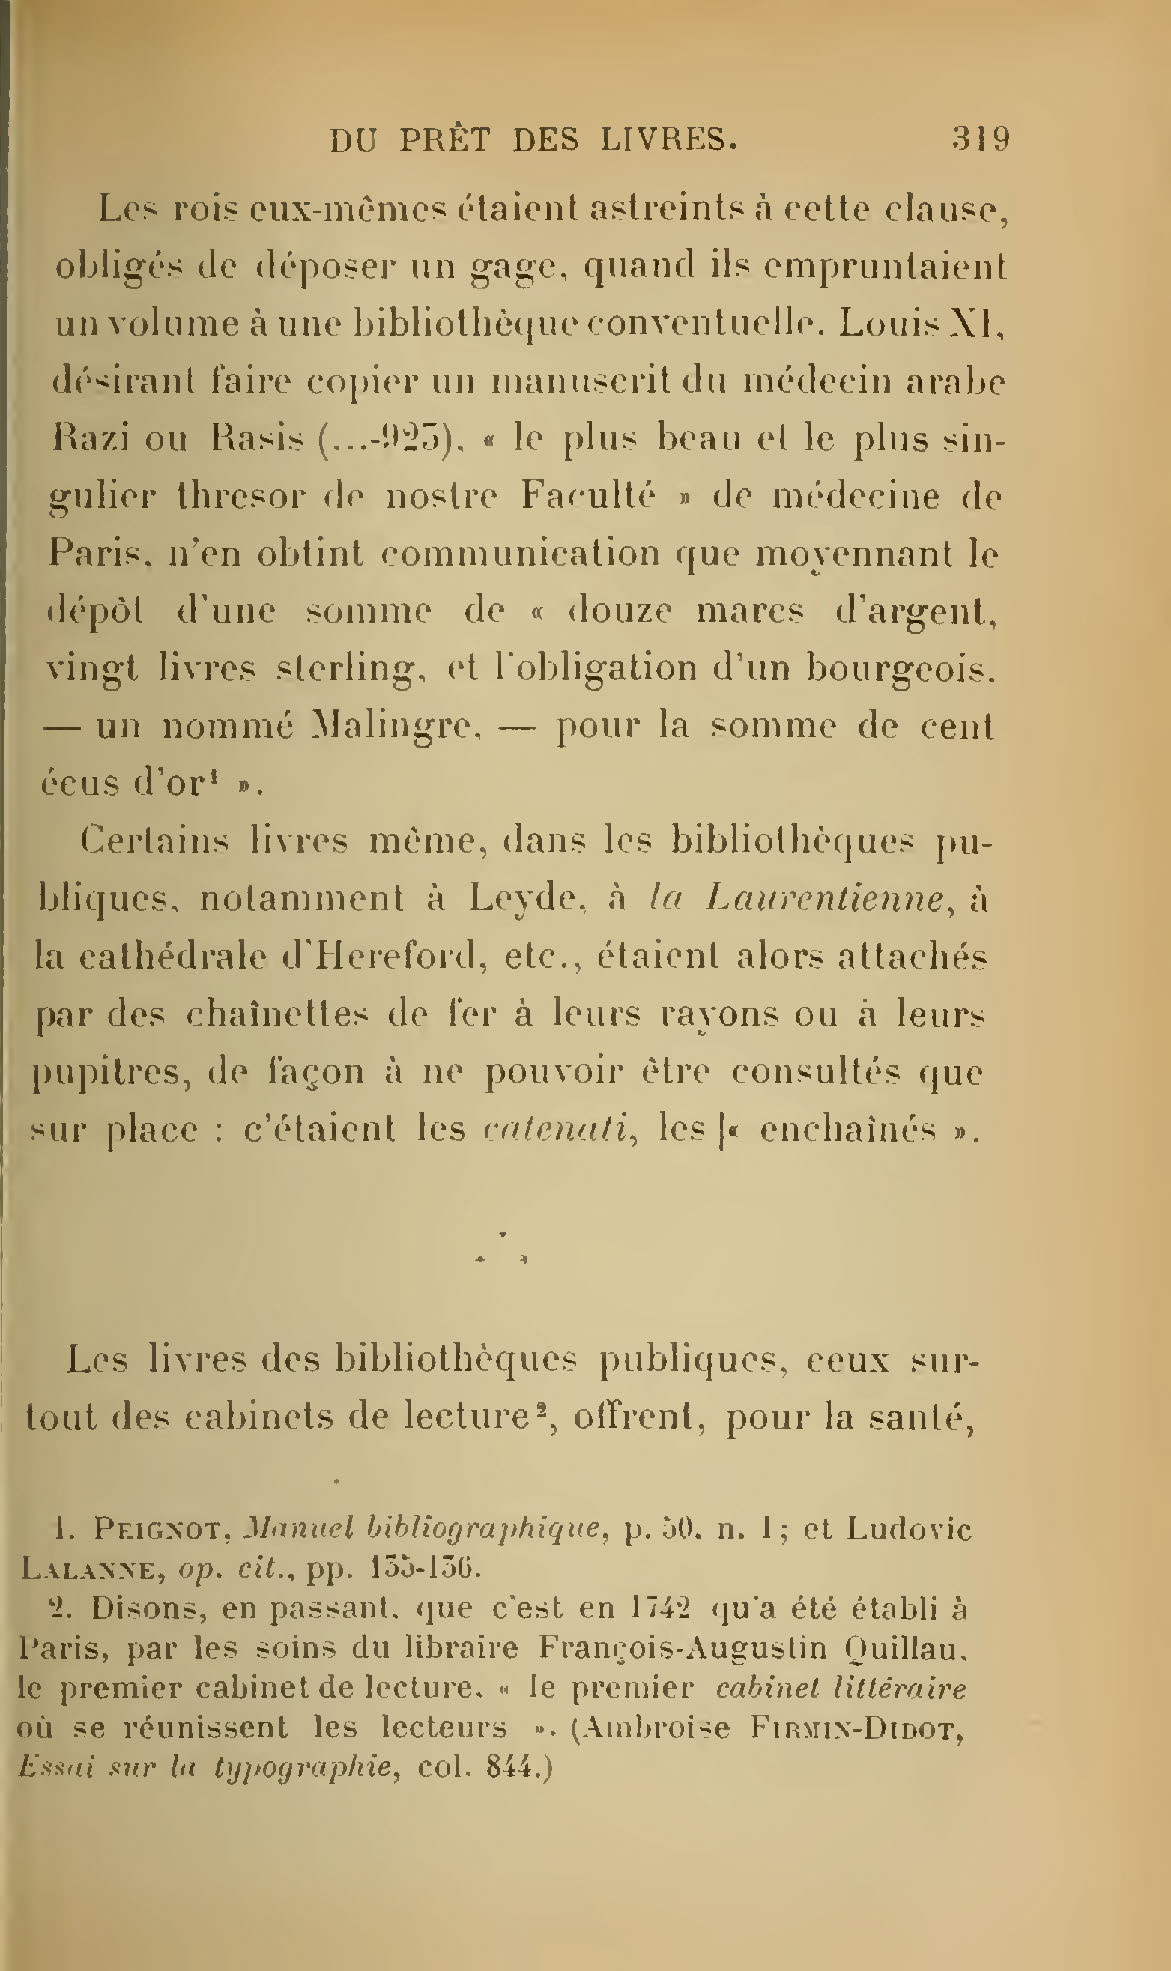 Albert Cim, Le Livre, t. II, p. 319.